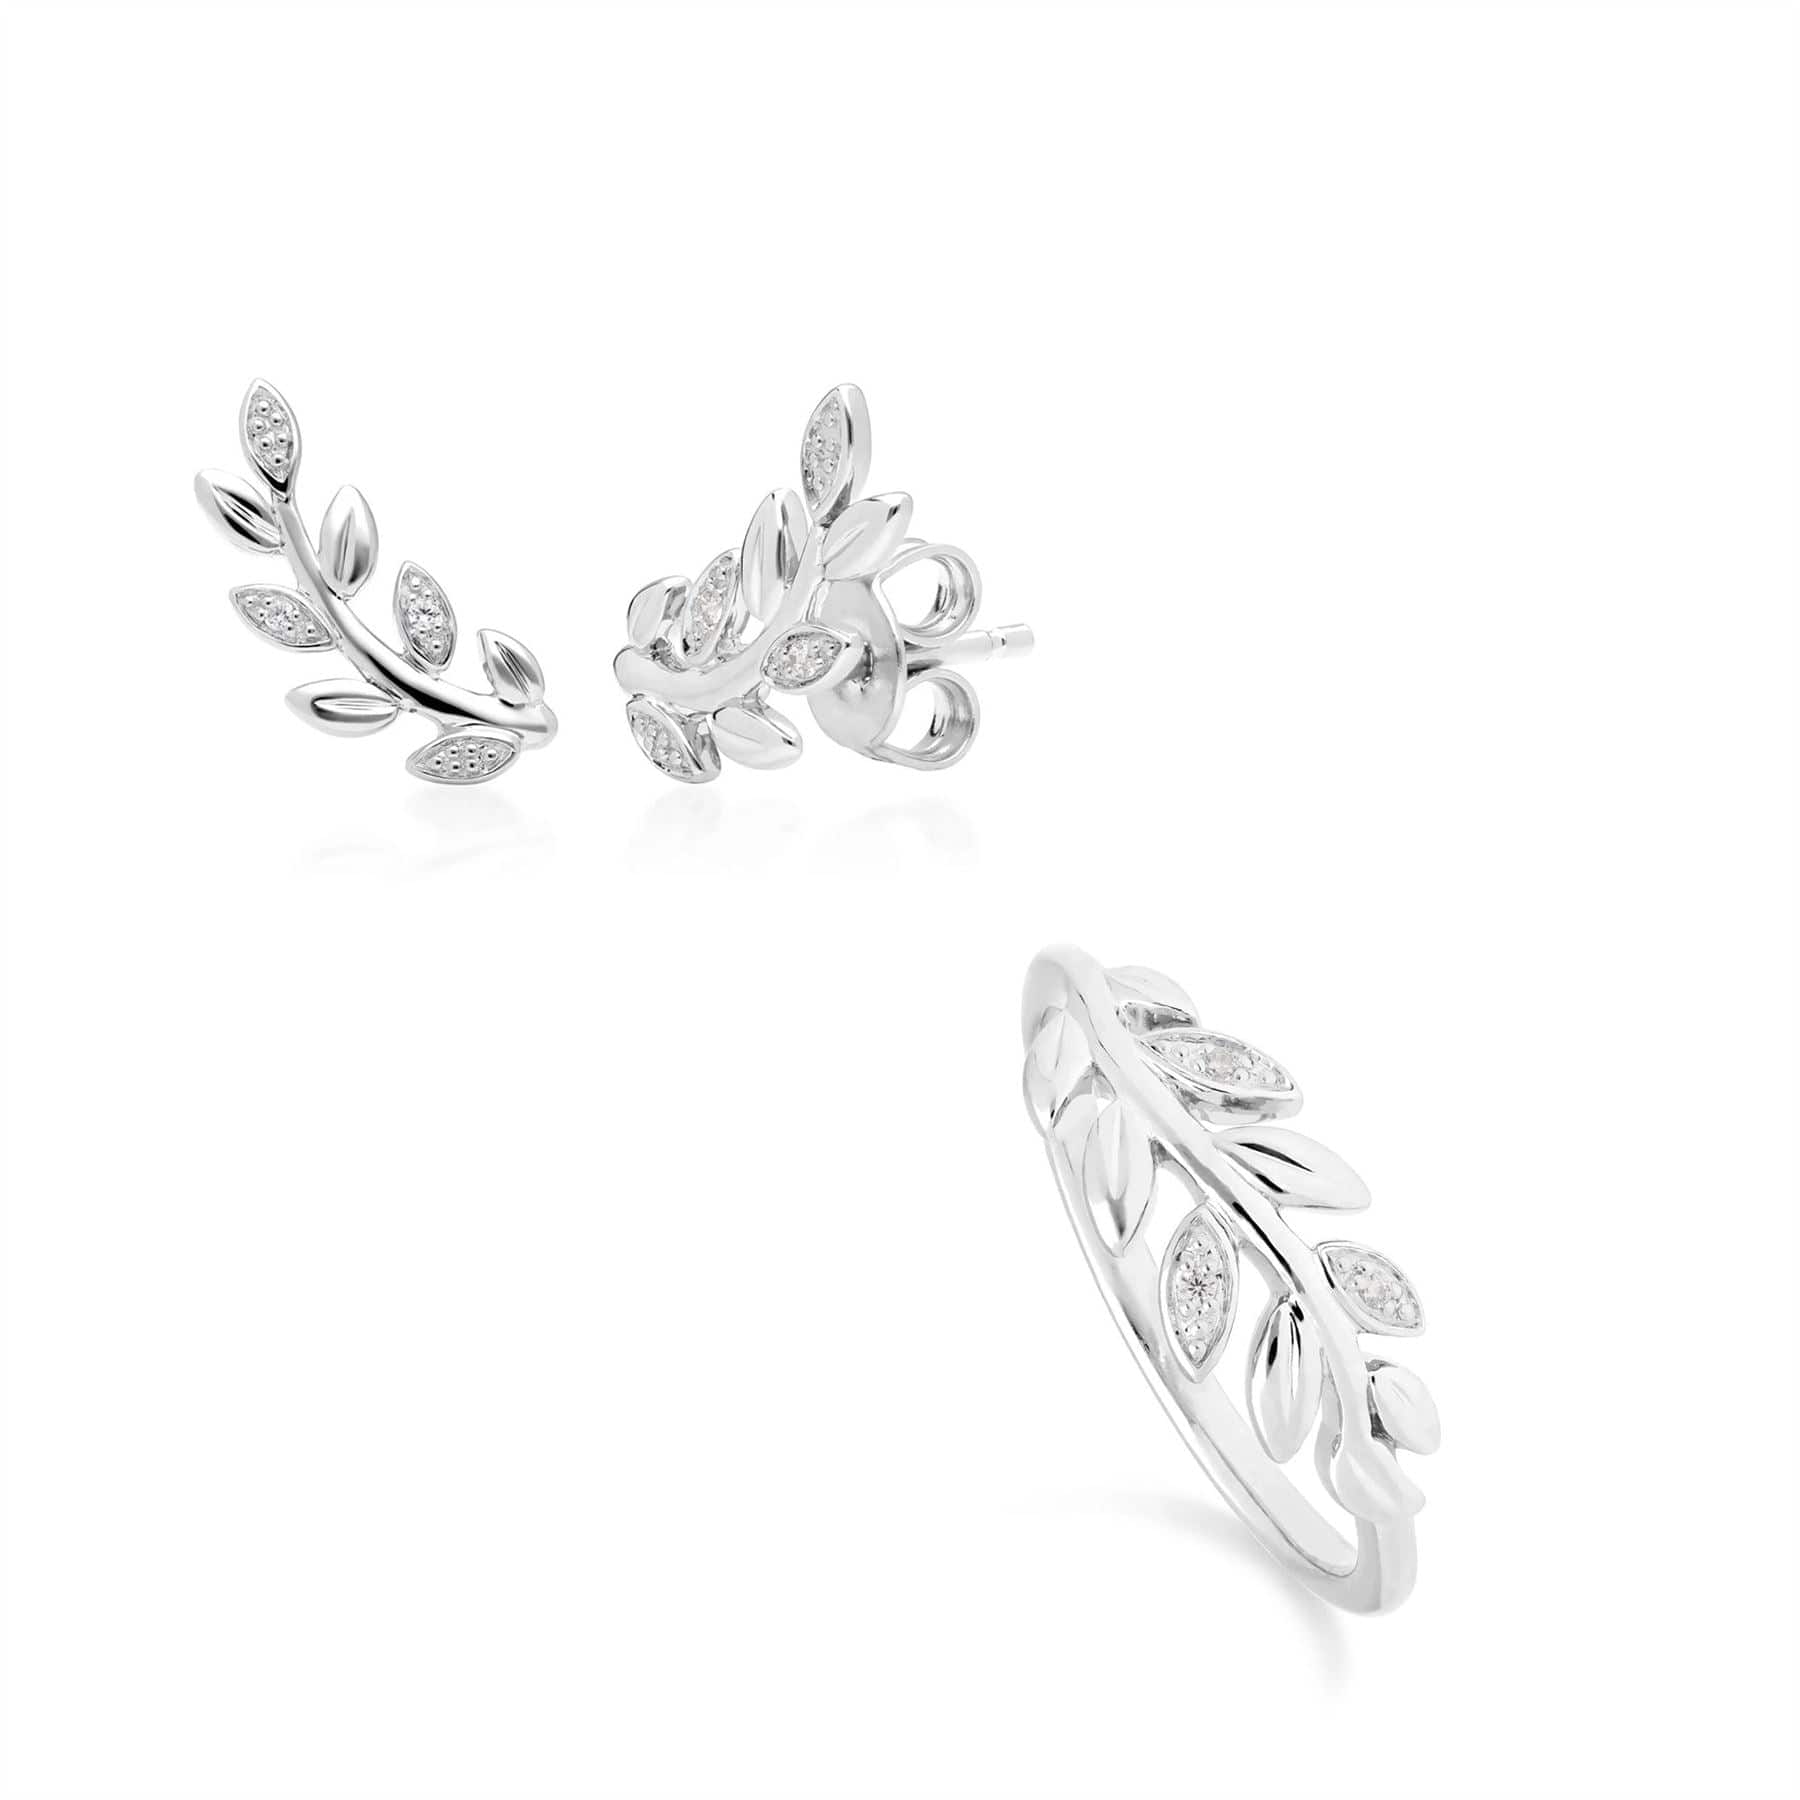 162E0273019-162R0397019 O Leaf Diamond Stud Earring & Ring Set in 9ct White Gold 1